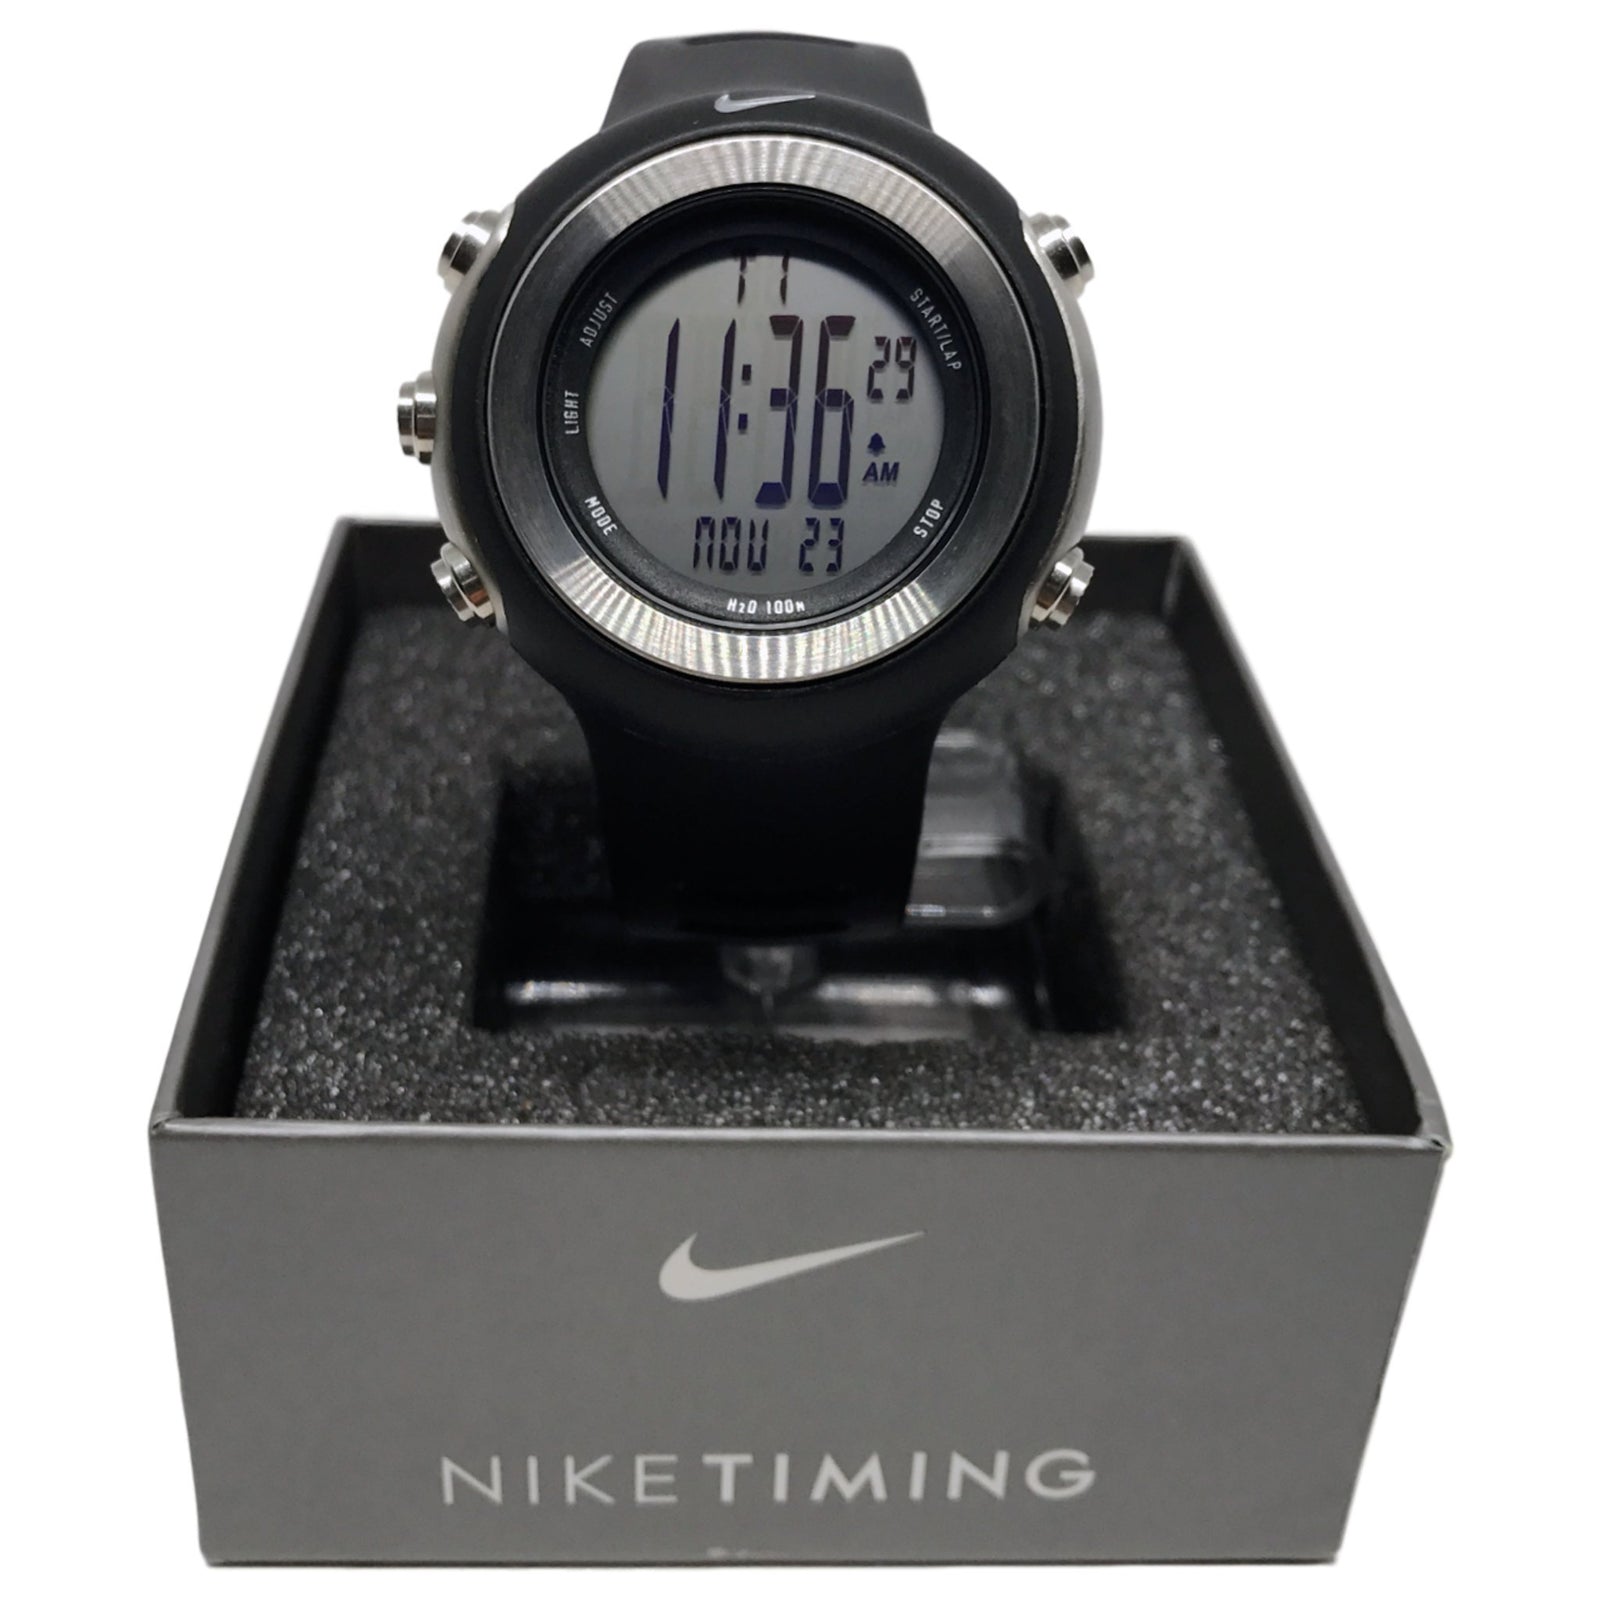 Inyección Sotavento Viaje Nike Oregon Series Watch | In Stock Now | Brand New - Elevn:59